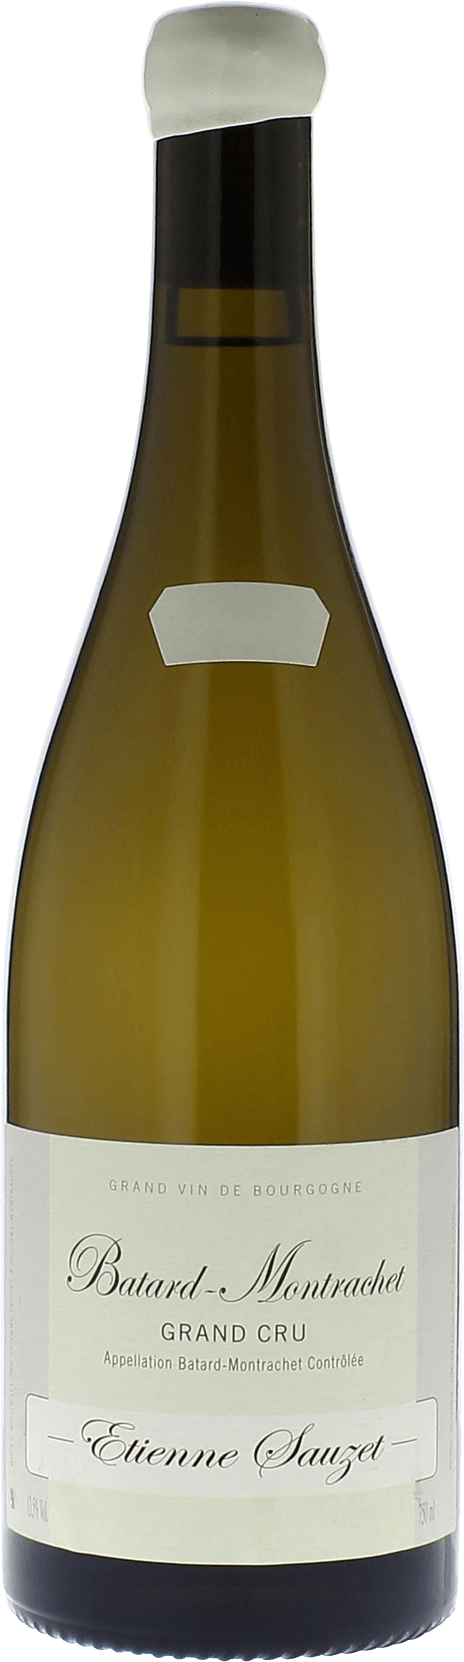 Batard montrachet 2017 Domaine SAUZET, Bourgogne blanc